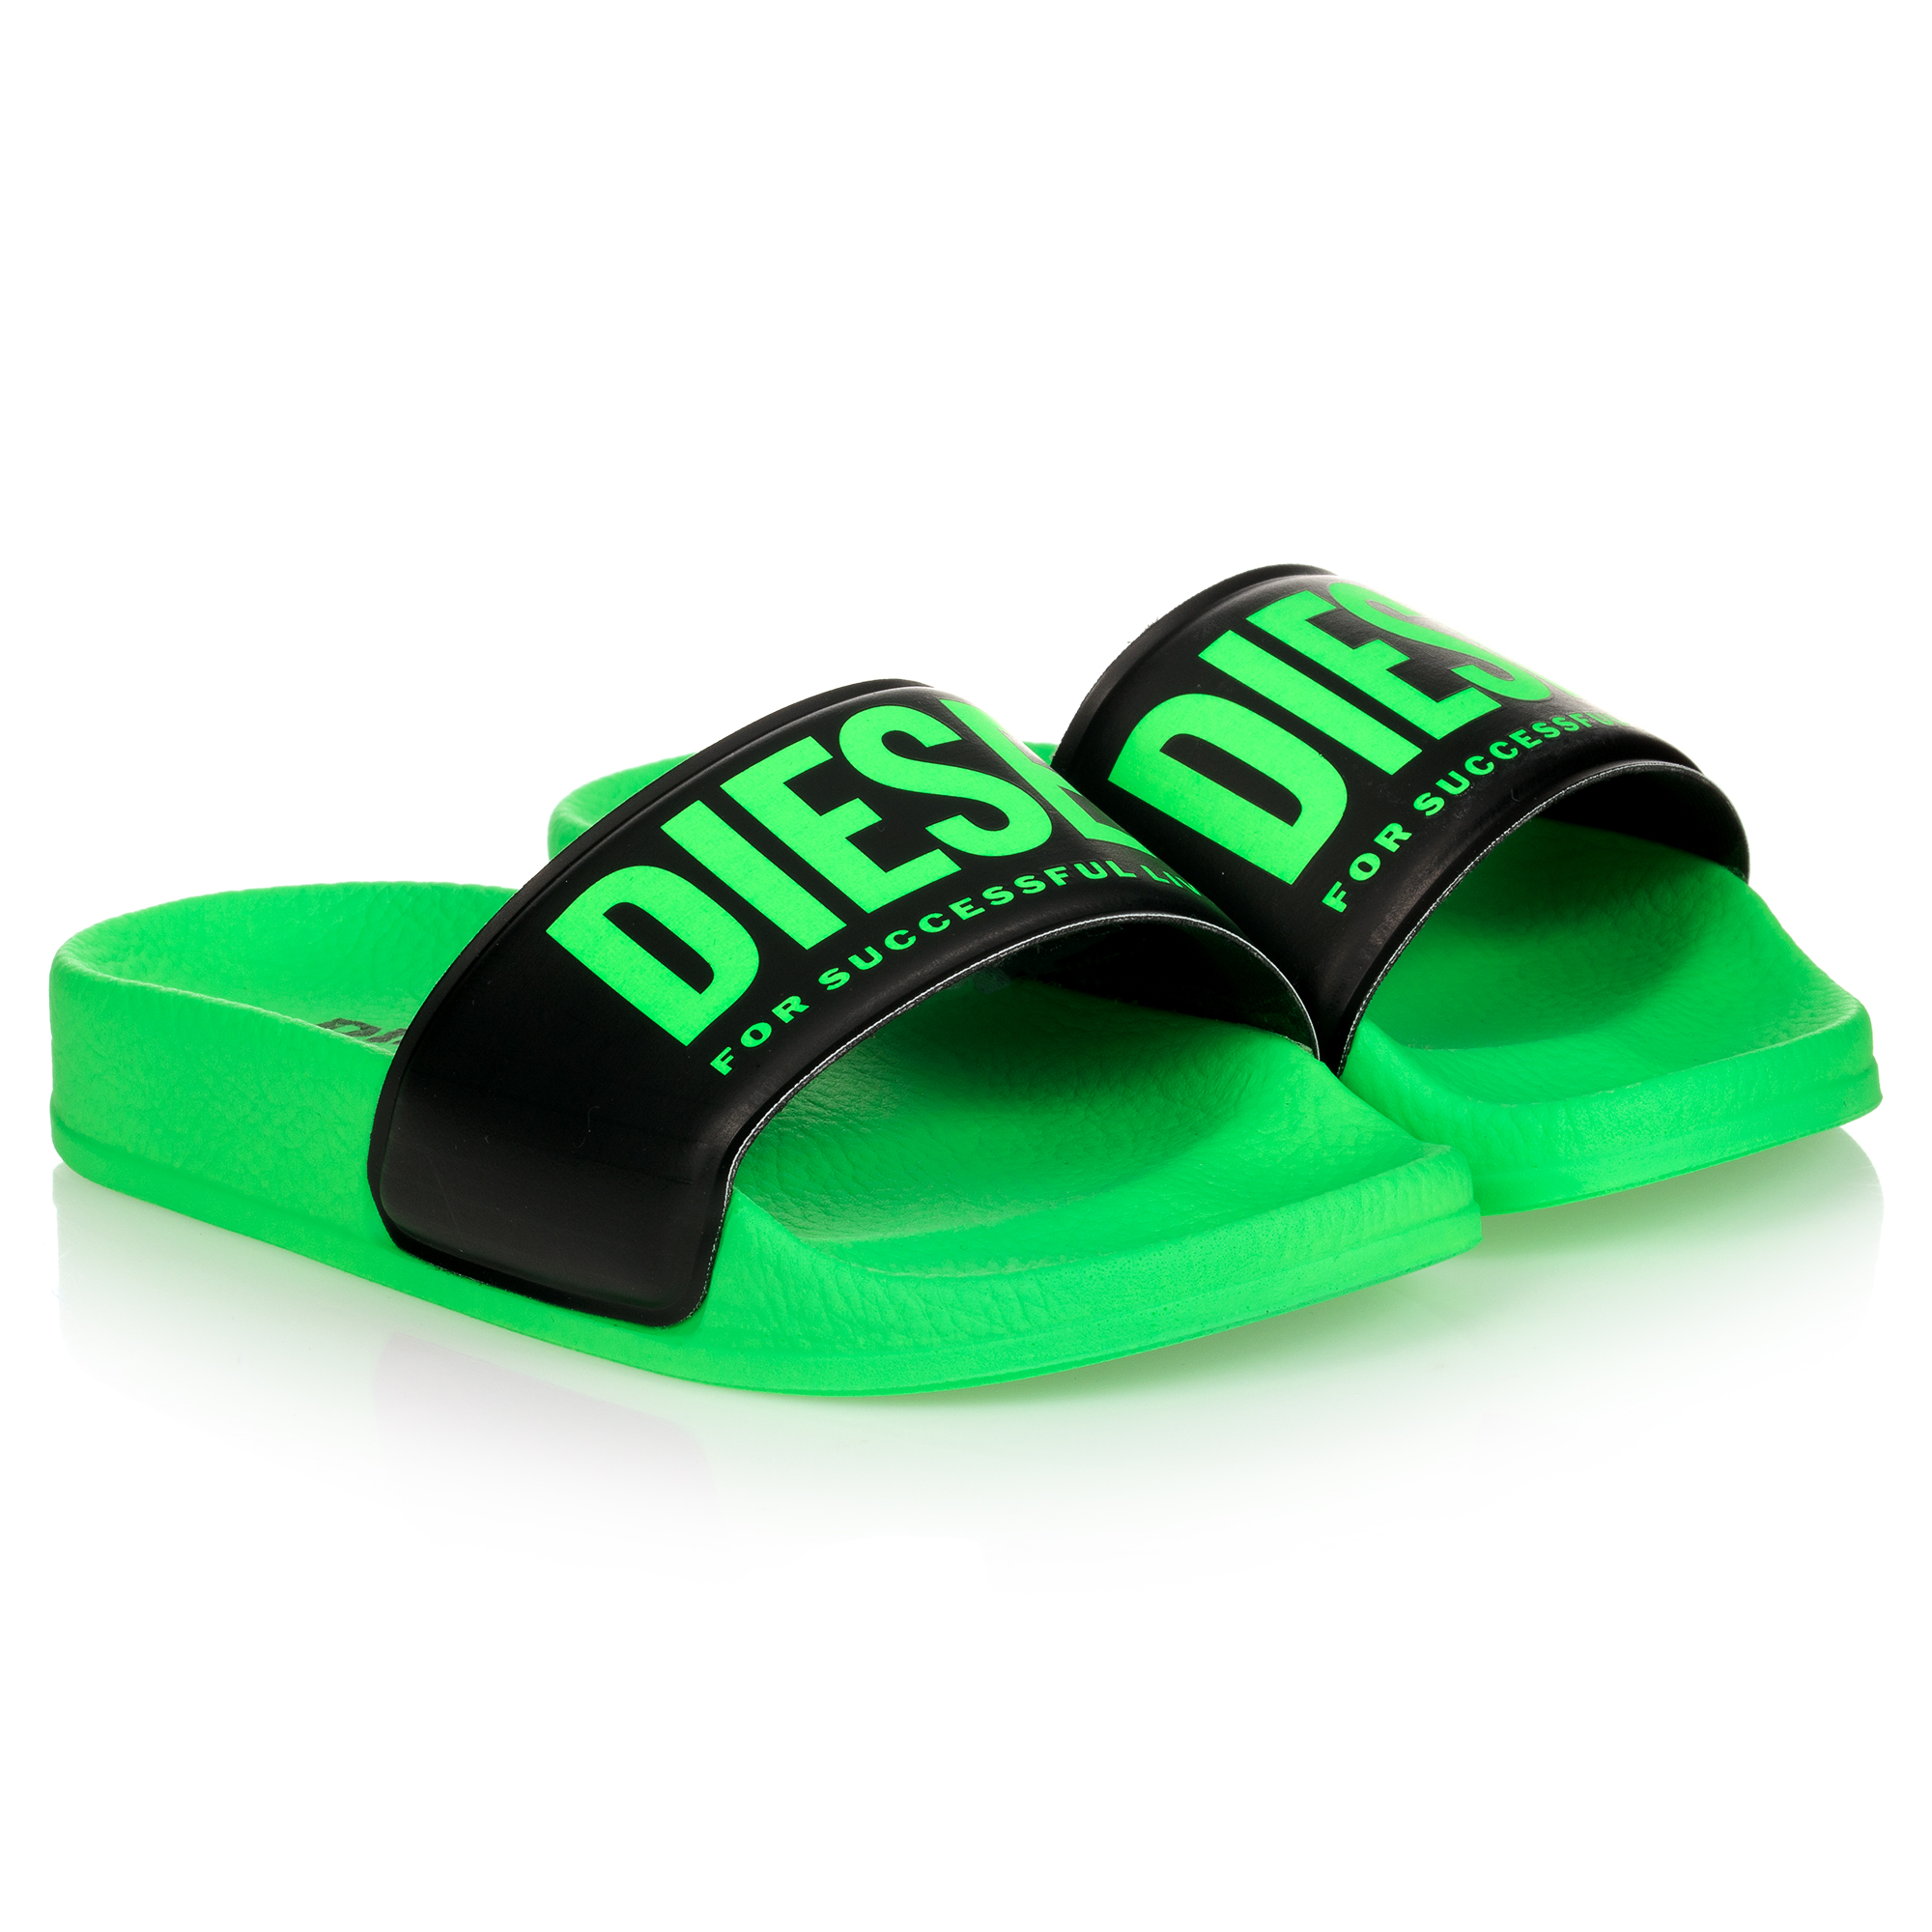 Diesel - Green Black Logo Sliders Childrensalon Outlet